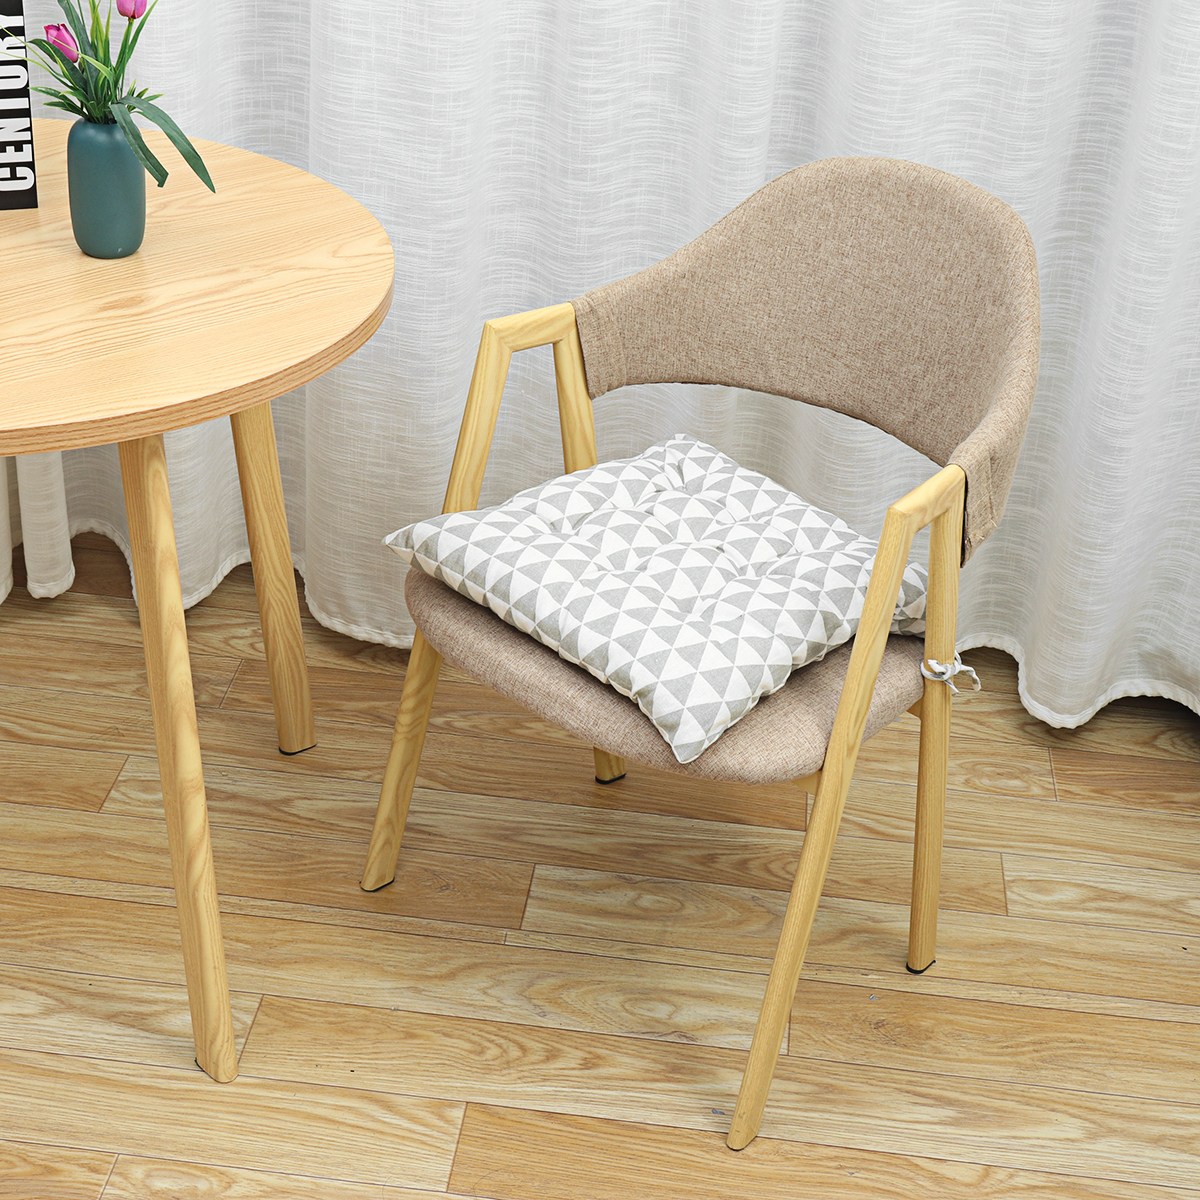 45x45cm-Square-Cotton-Linen-Chair-Cushion-Pillow-Seat-Pads-Mat-Home-Office-Decor-1626341-4